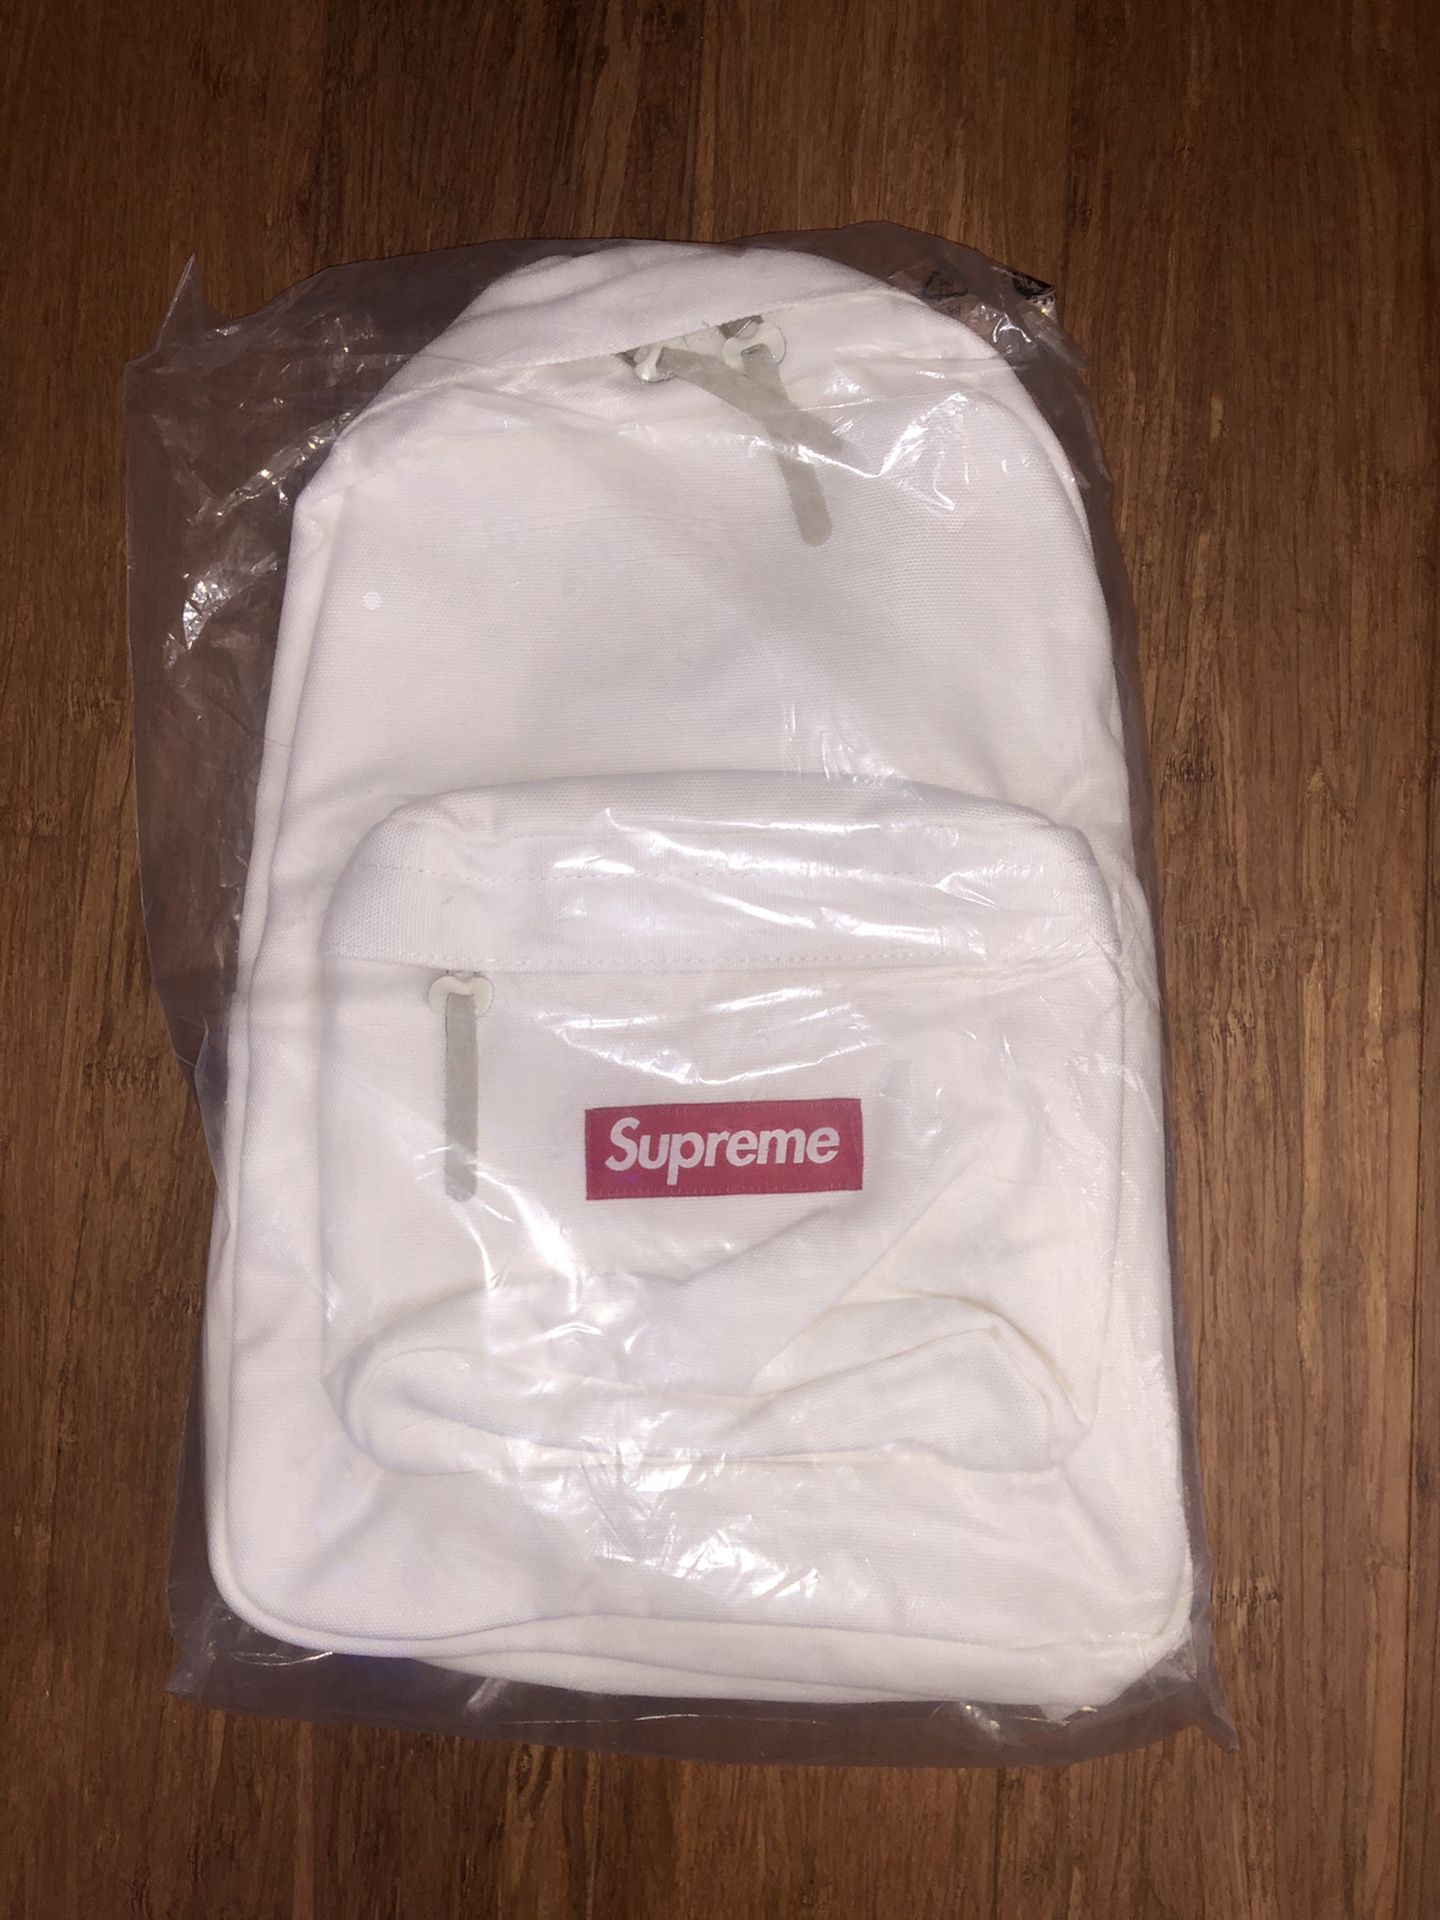 Supreme Canvas Backpack ($240)